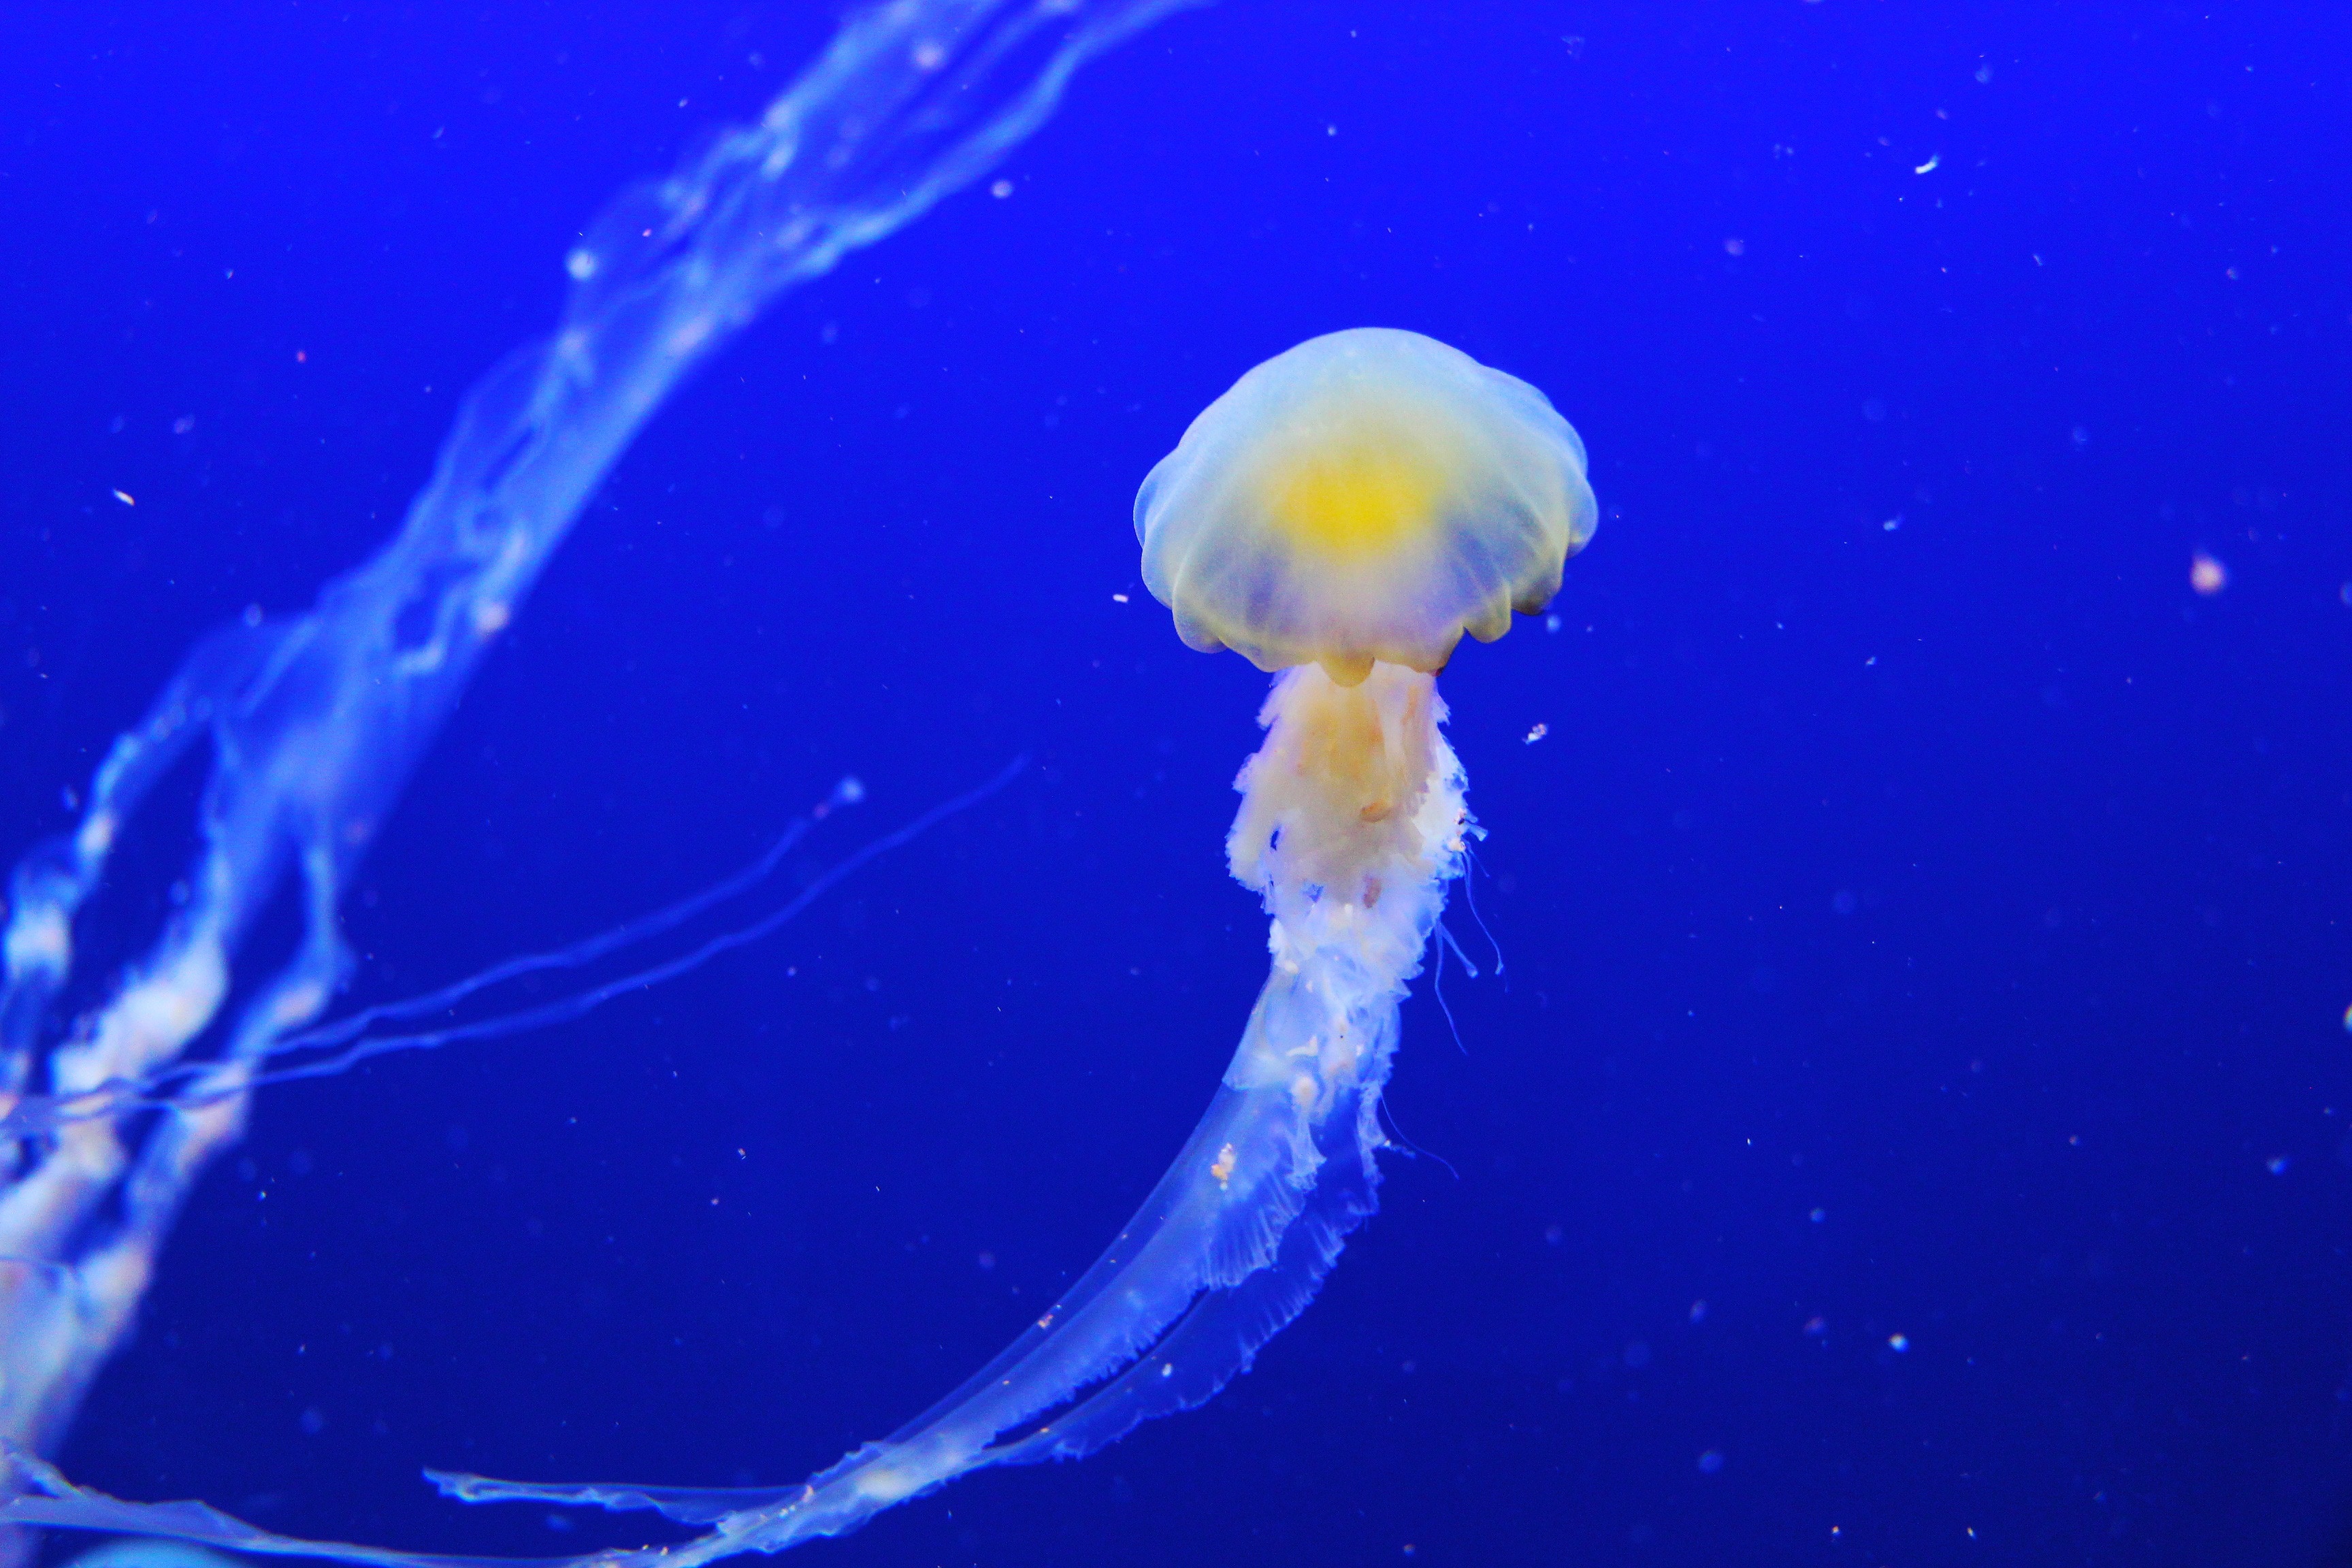 jellyfish image